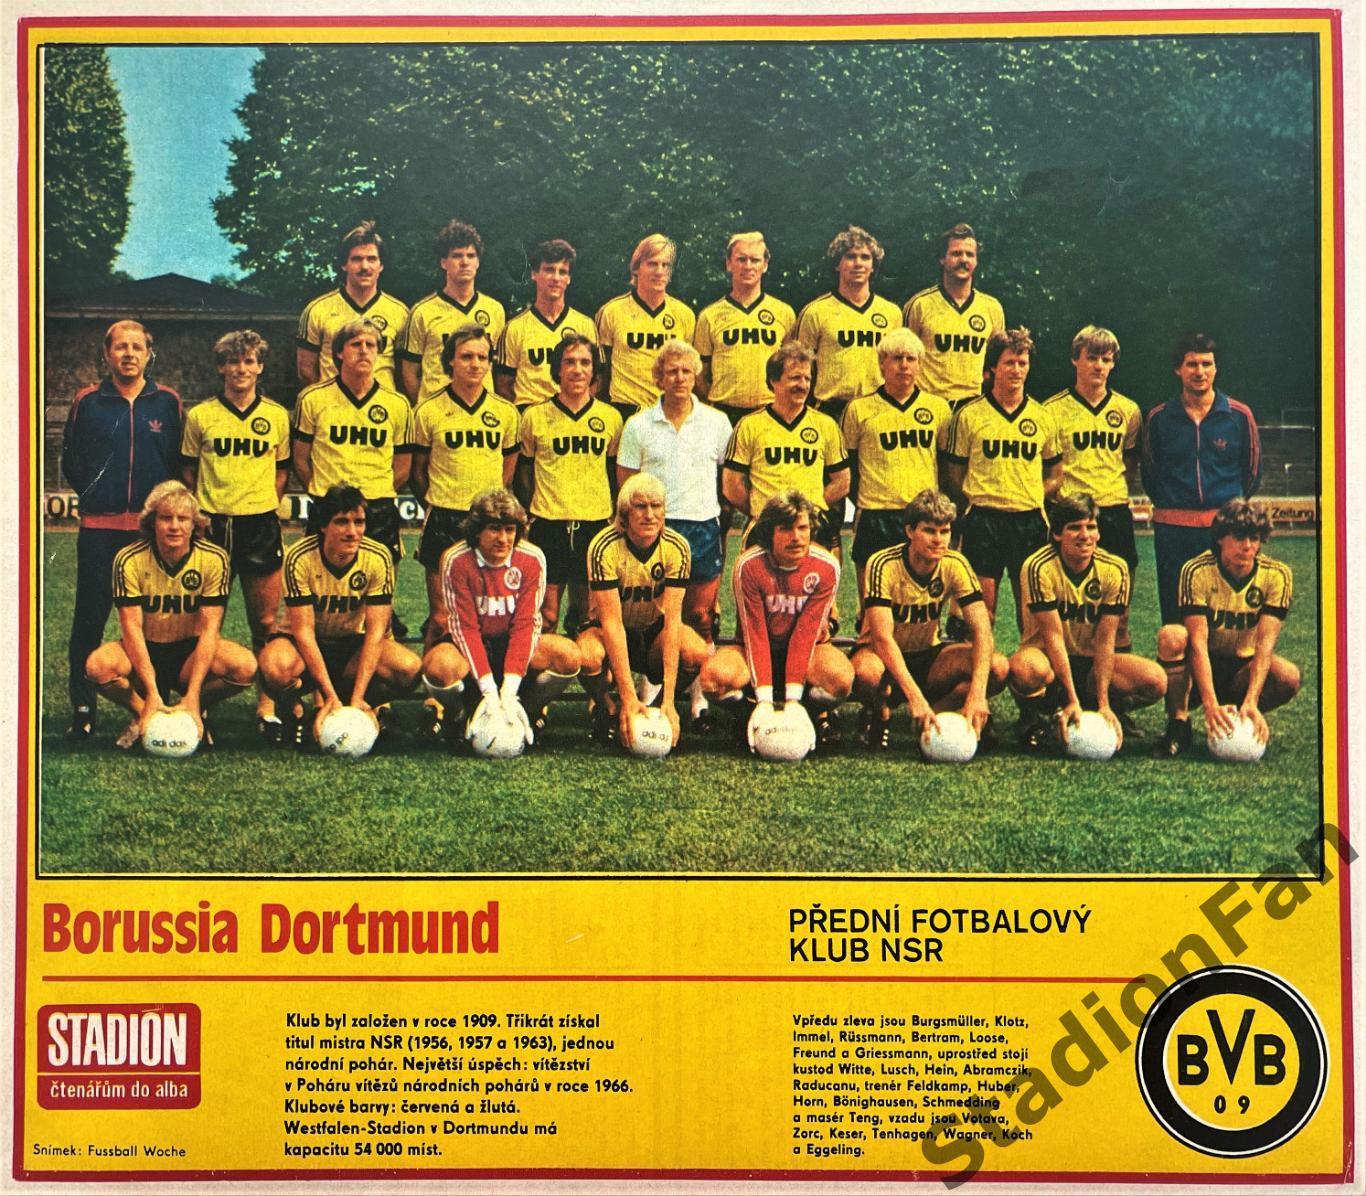 Постер из журнала Стадион (Stadion) - Borussia Dortmund, 1983.